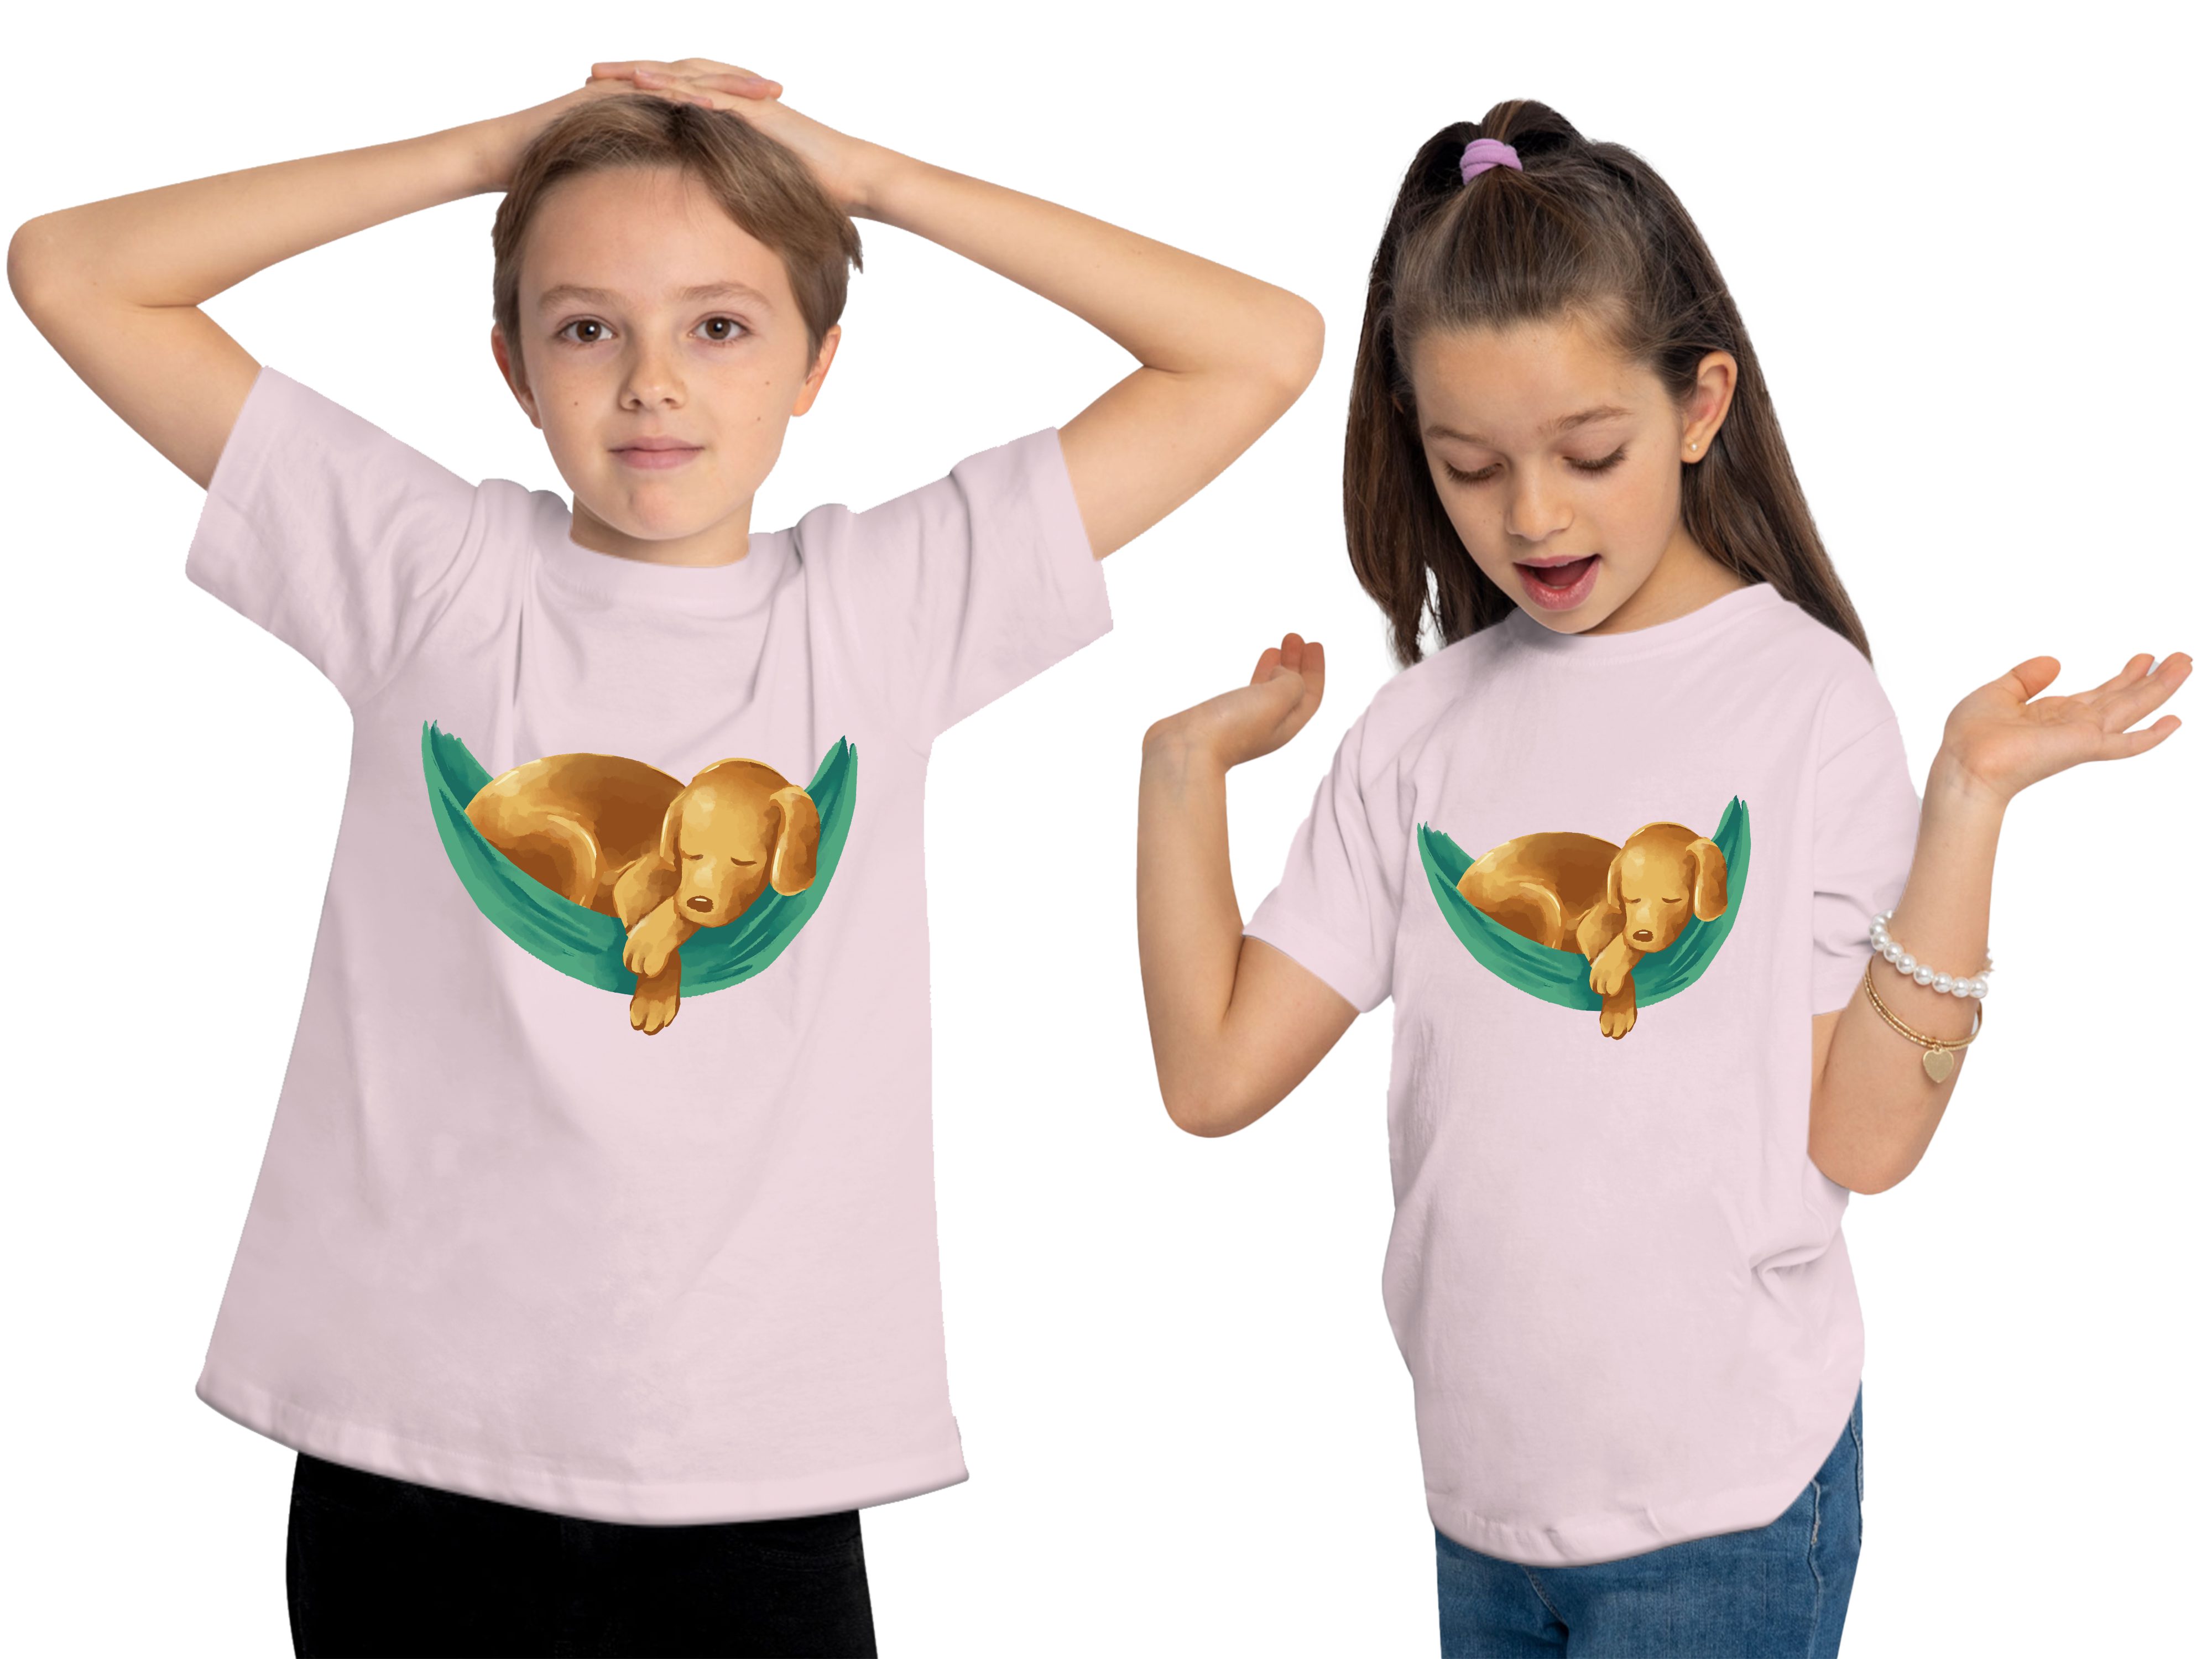 MyDesign24 T-Shirt Kinder Hunde rosa in bedruckt Hängematte Baumwollshirt i245 mit Welpe Shirt Labrador Print Aufdruck, 